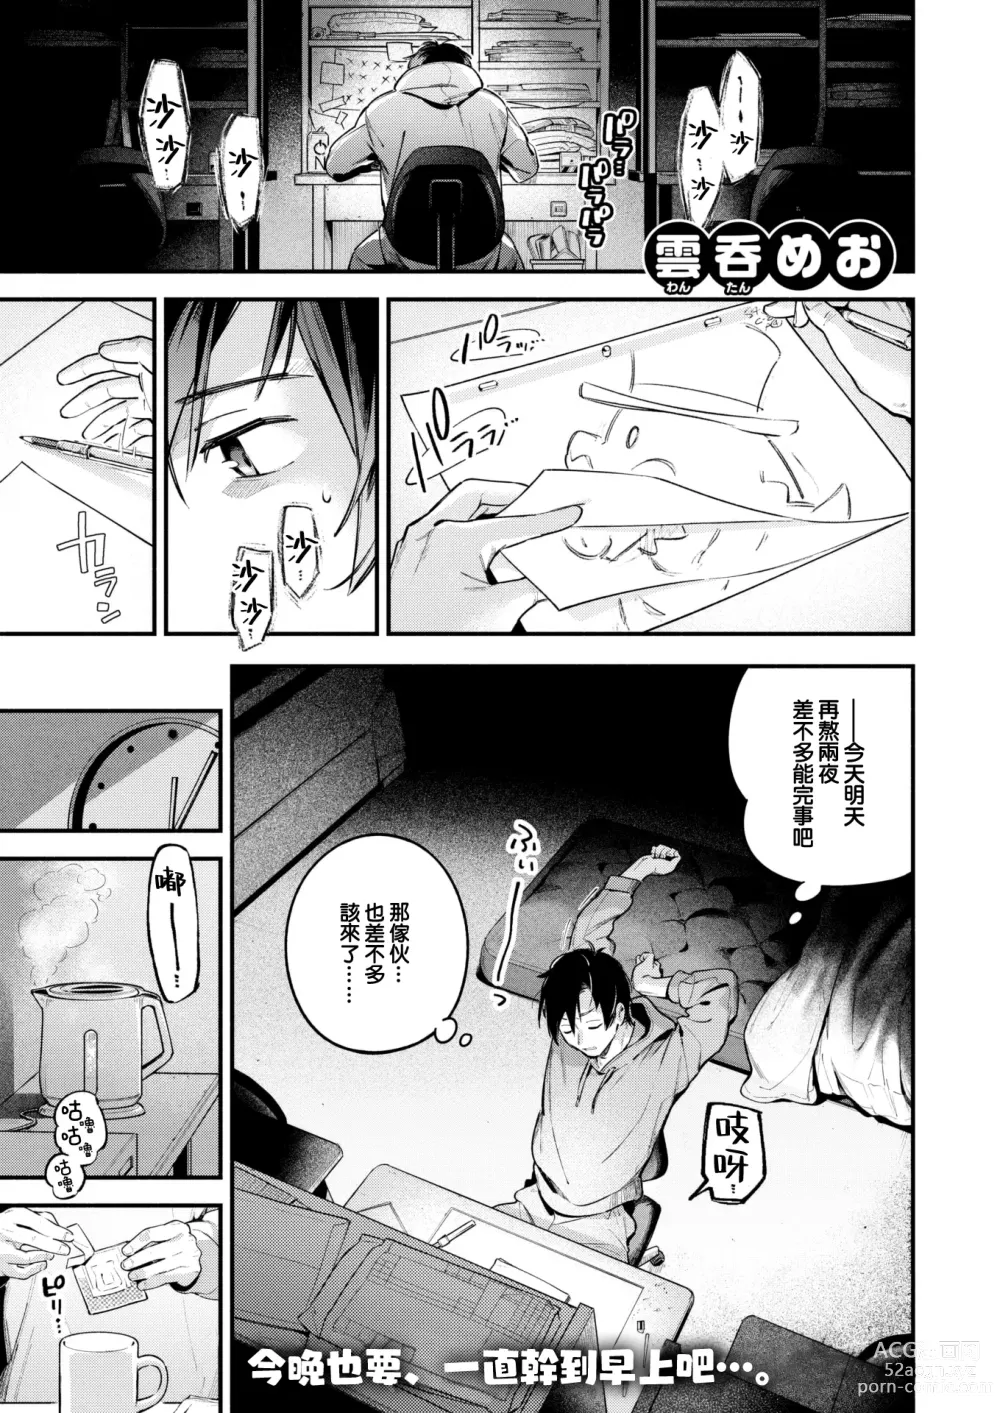 Page 2 of manga Atelier